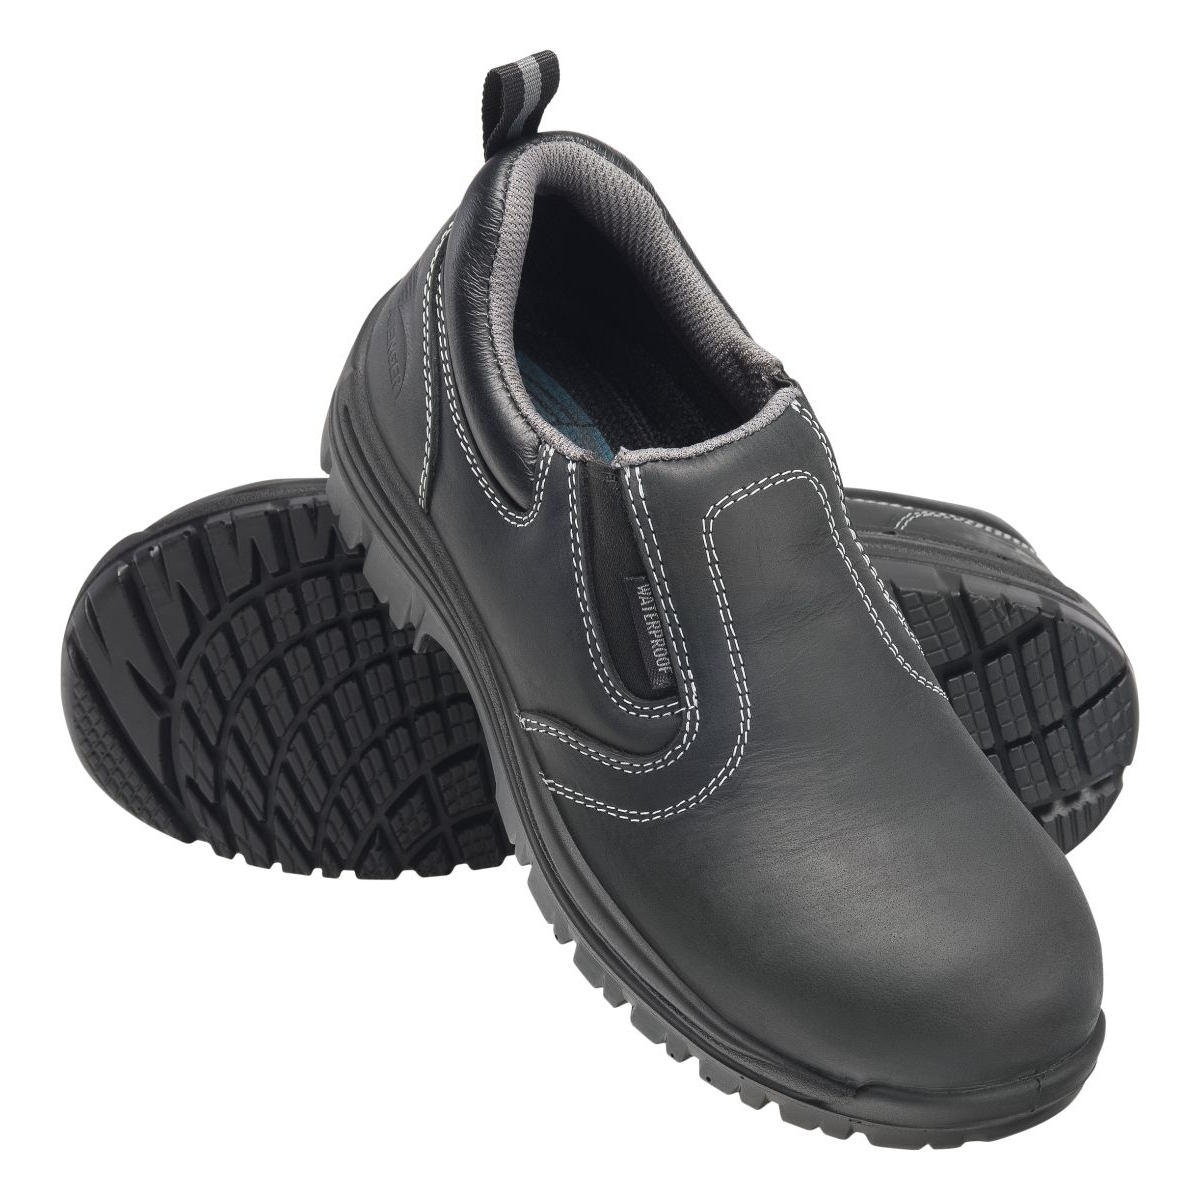 FSI FOOTWEAR SPECIALTIES INTERNATIONAL NAUTILUS Avenger Women's Foreman Slip-On Composite Toe PR Work Shoes Black - A7169 - BLACK, 10-W